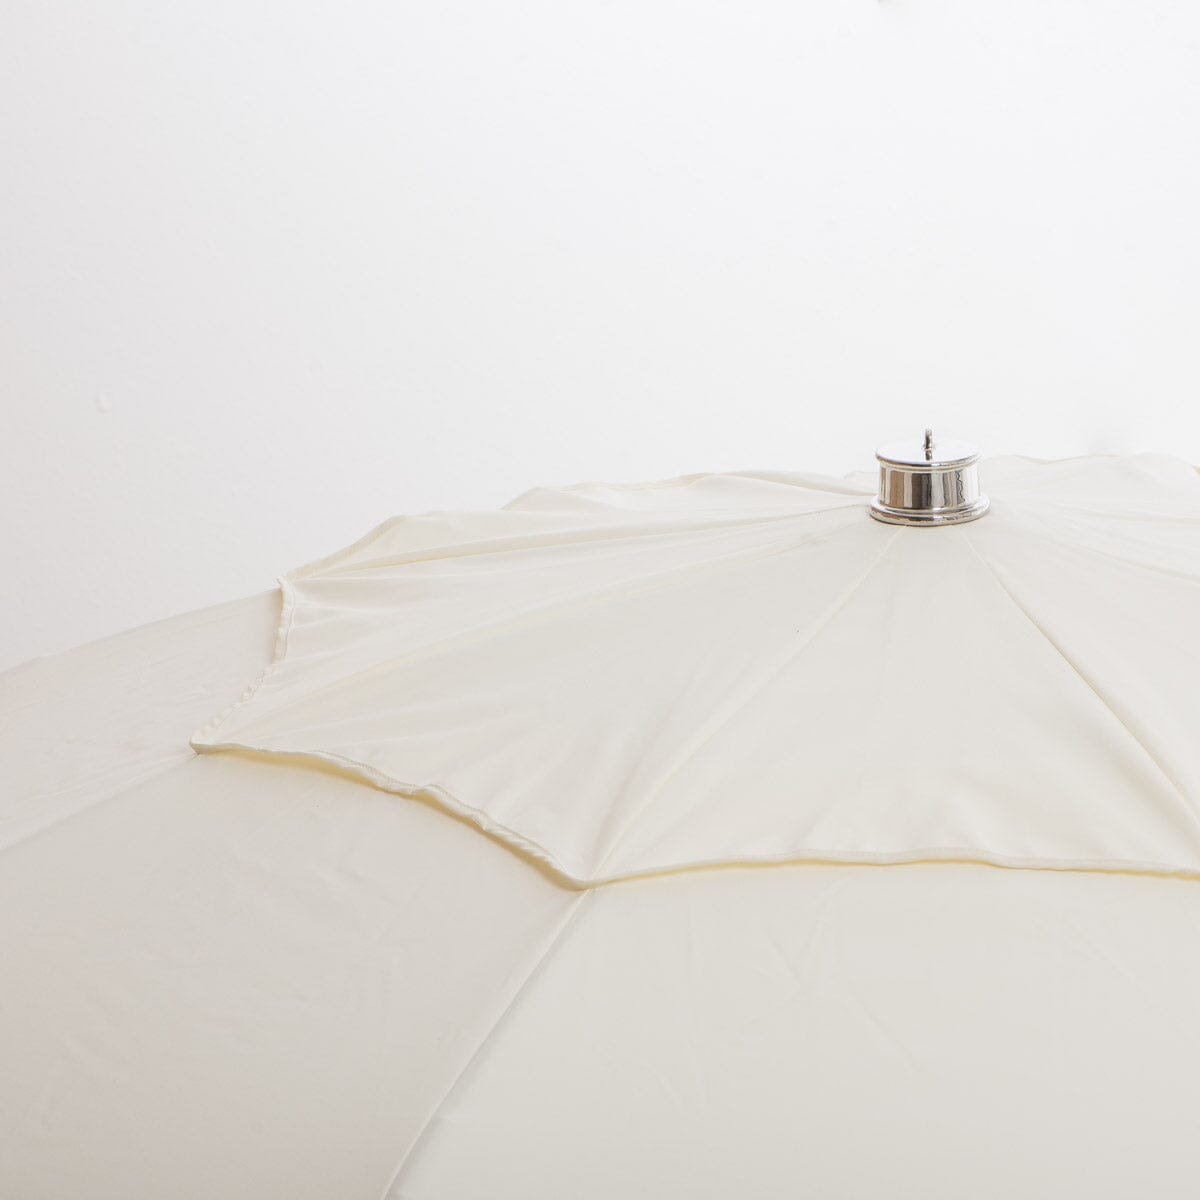 close up of chrome top cap on white patio umbrella